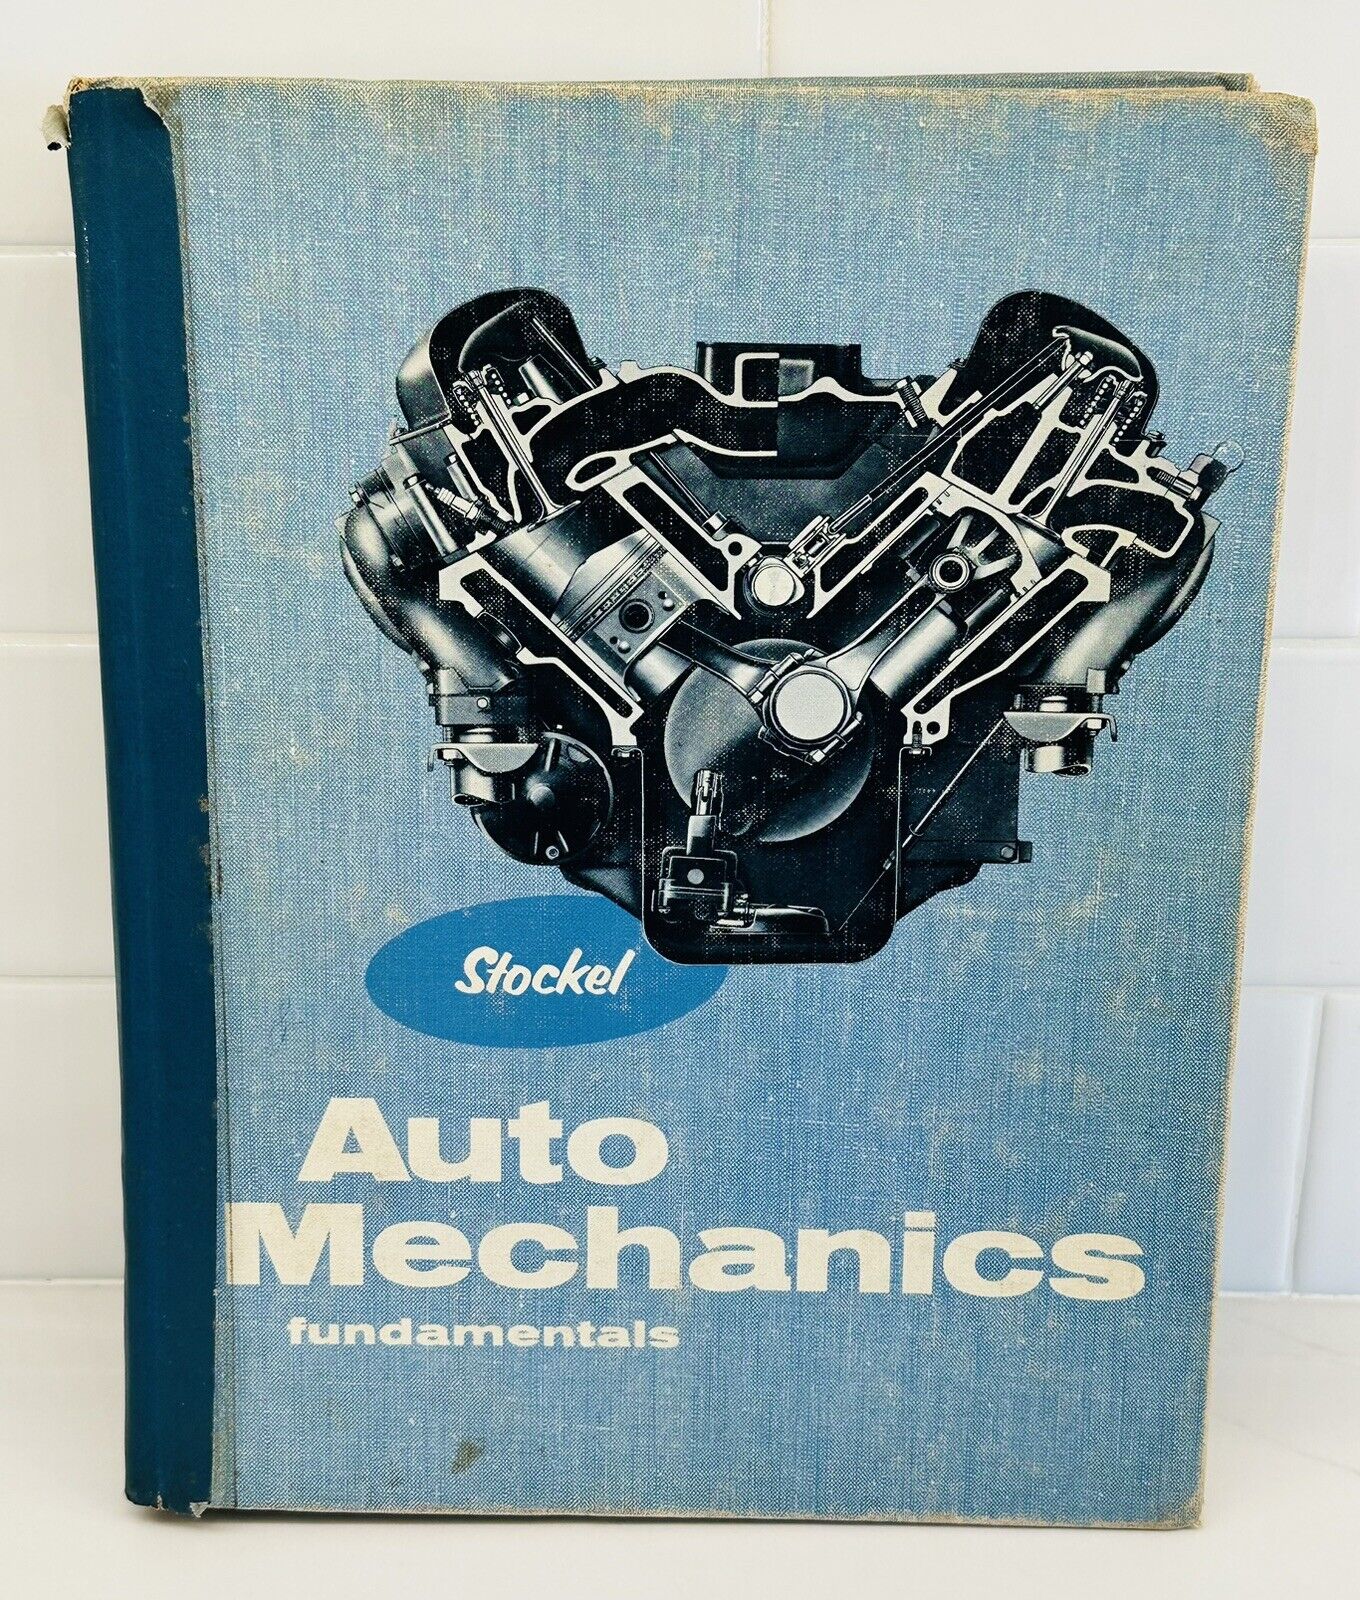 AUTO MECHANICS FUNDAMENTALS, by Stockel, 1963, Hard Cover Book. Vintage Auto